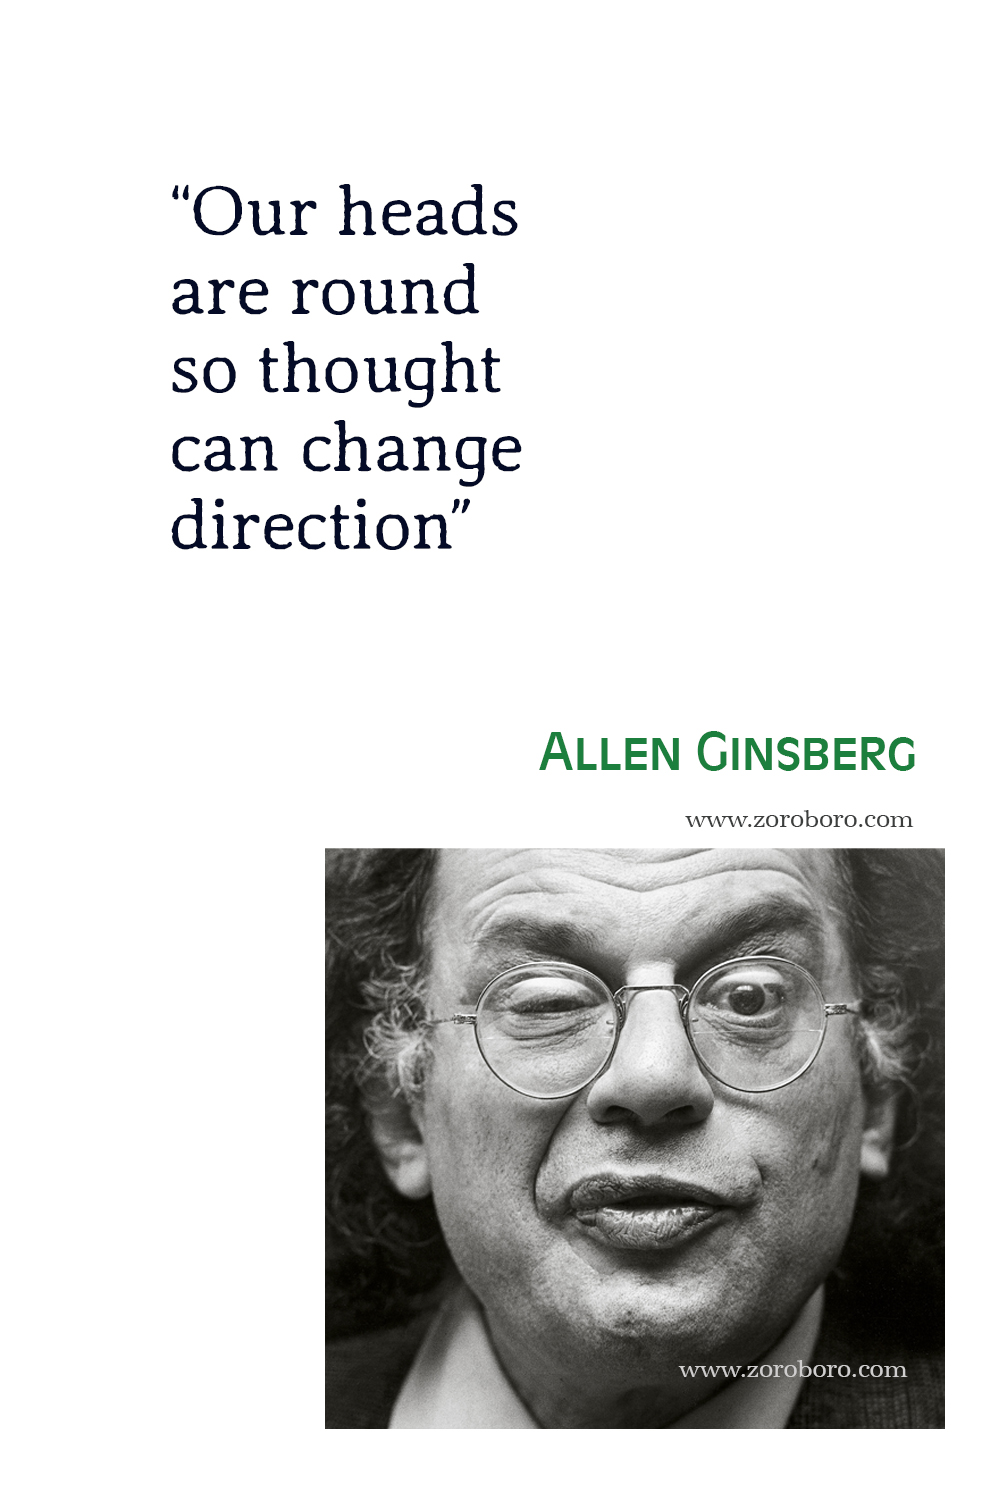 Allen Ginsberg Quotes, Poet, Poetry, Allen Ginsberg Poems, Allen Ginsberg Books Quotes, Allen Ginsberg : Selected Poems, Allen Ginsberg Howl and Other Poems & Kaddish and Other Poems .